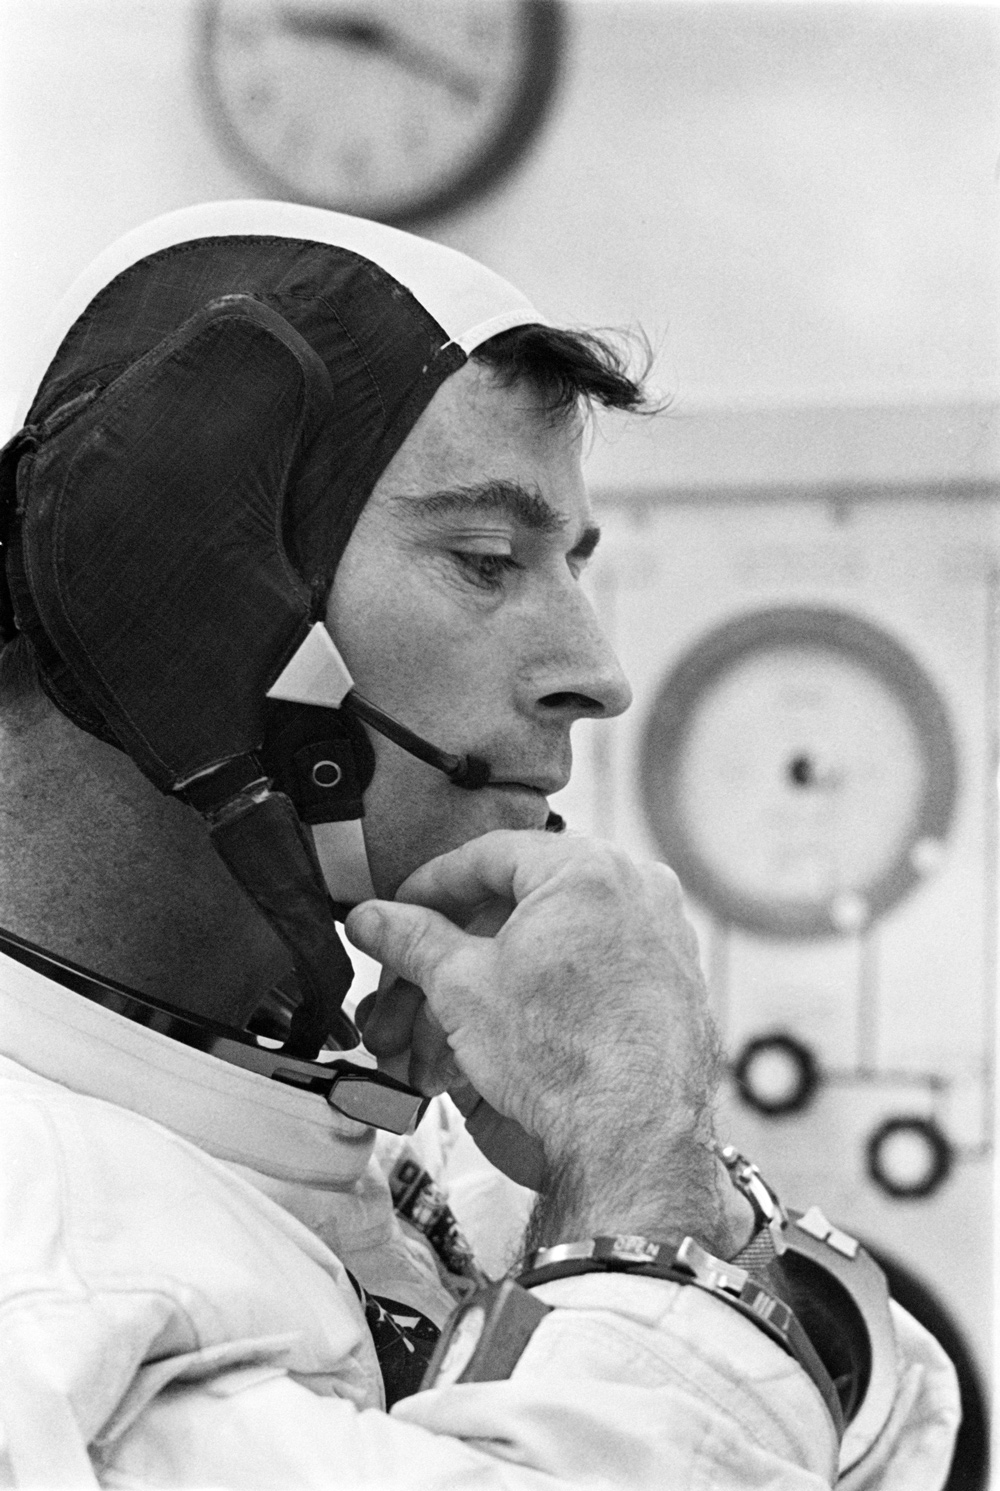 Astronaut adjusting strap on cap